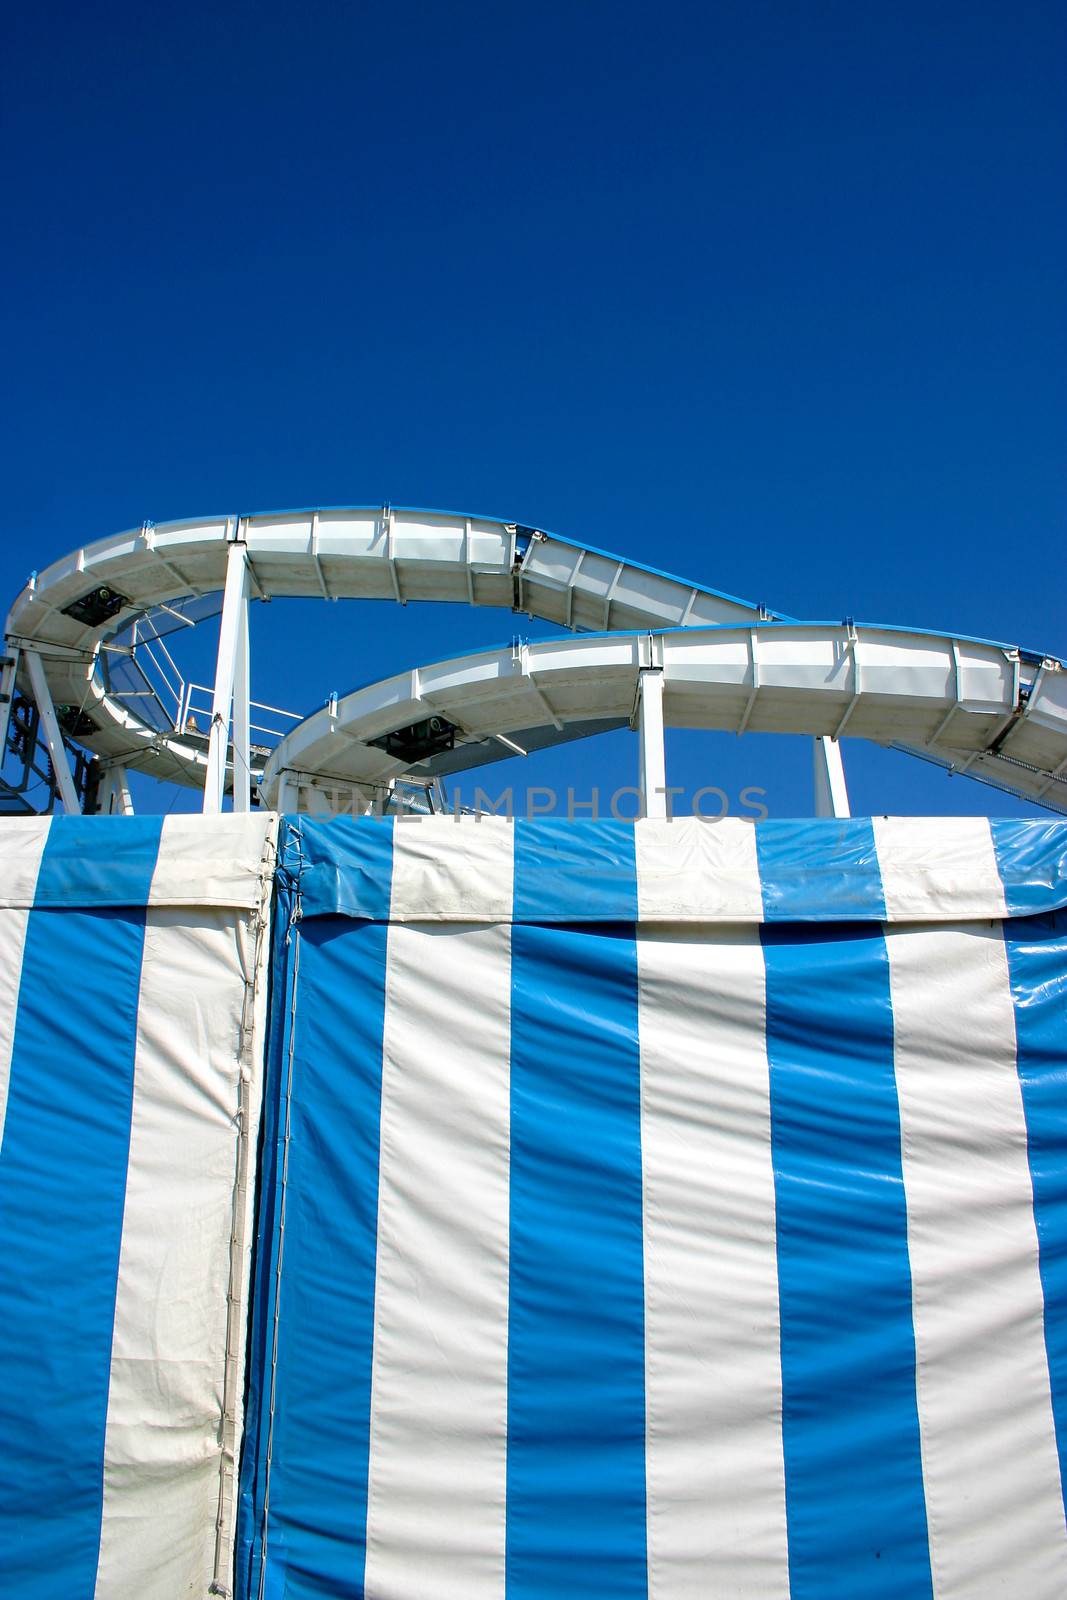 Roller coaster in Brighton under a blue sky